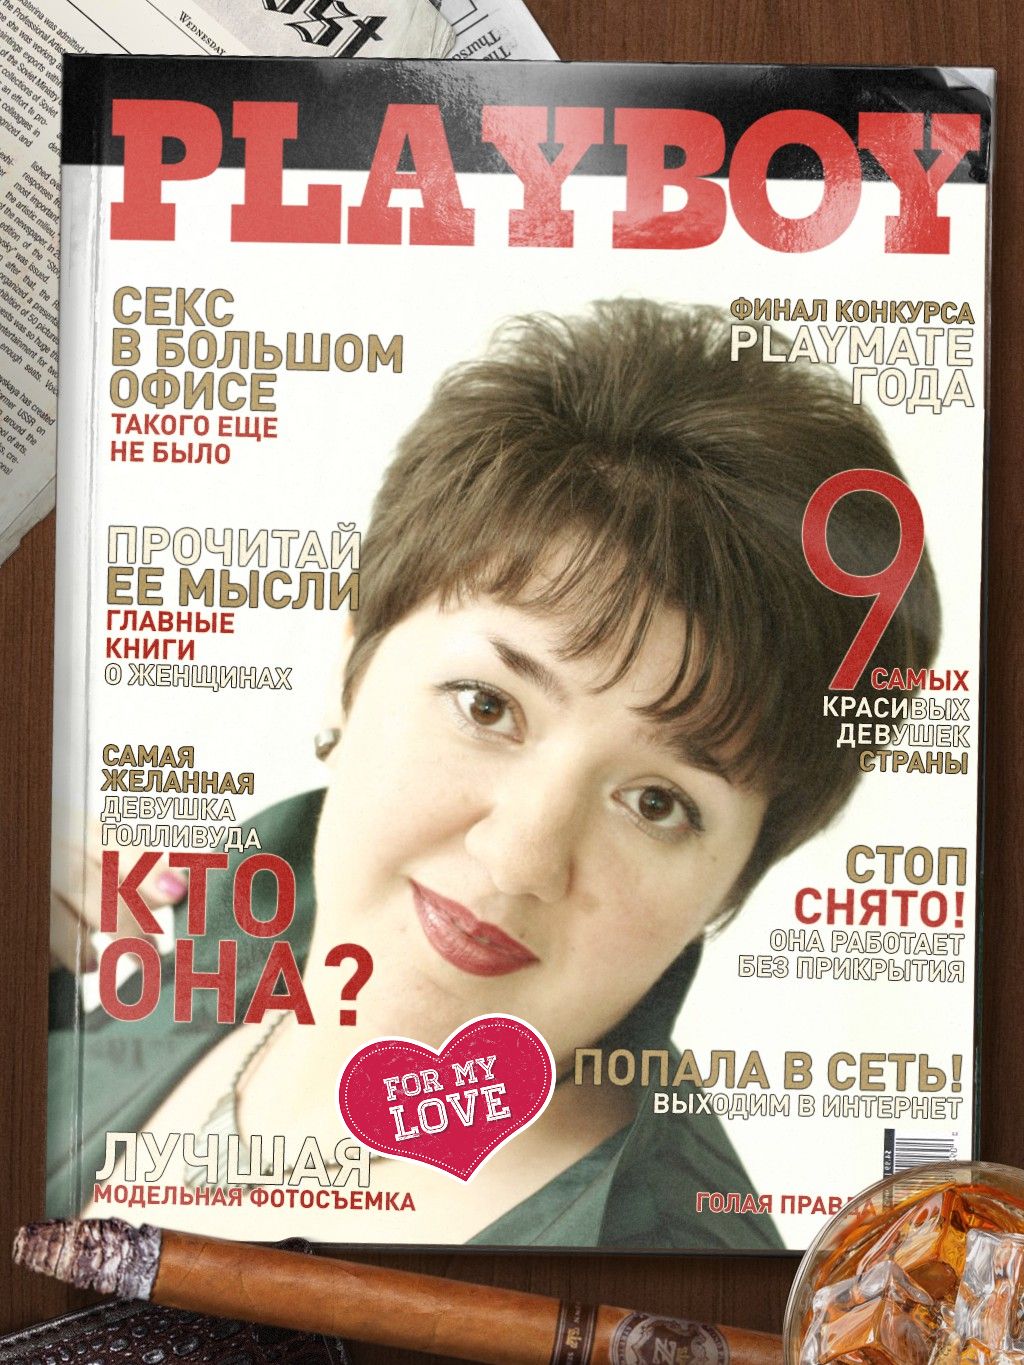 playboy magazine photos